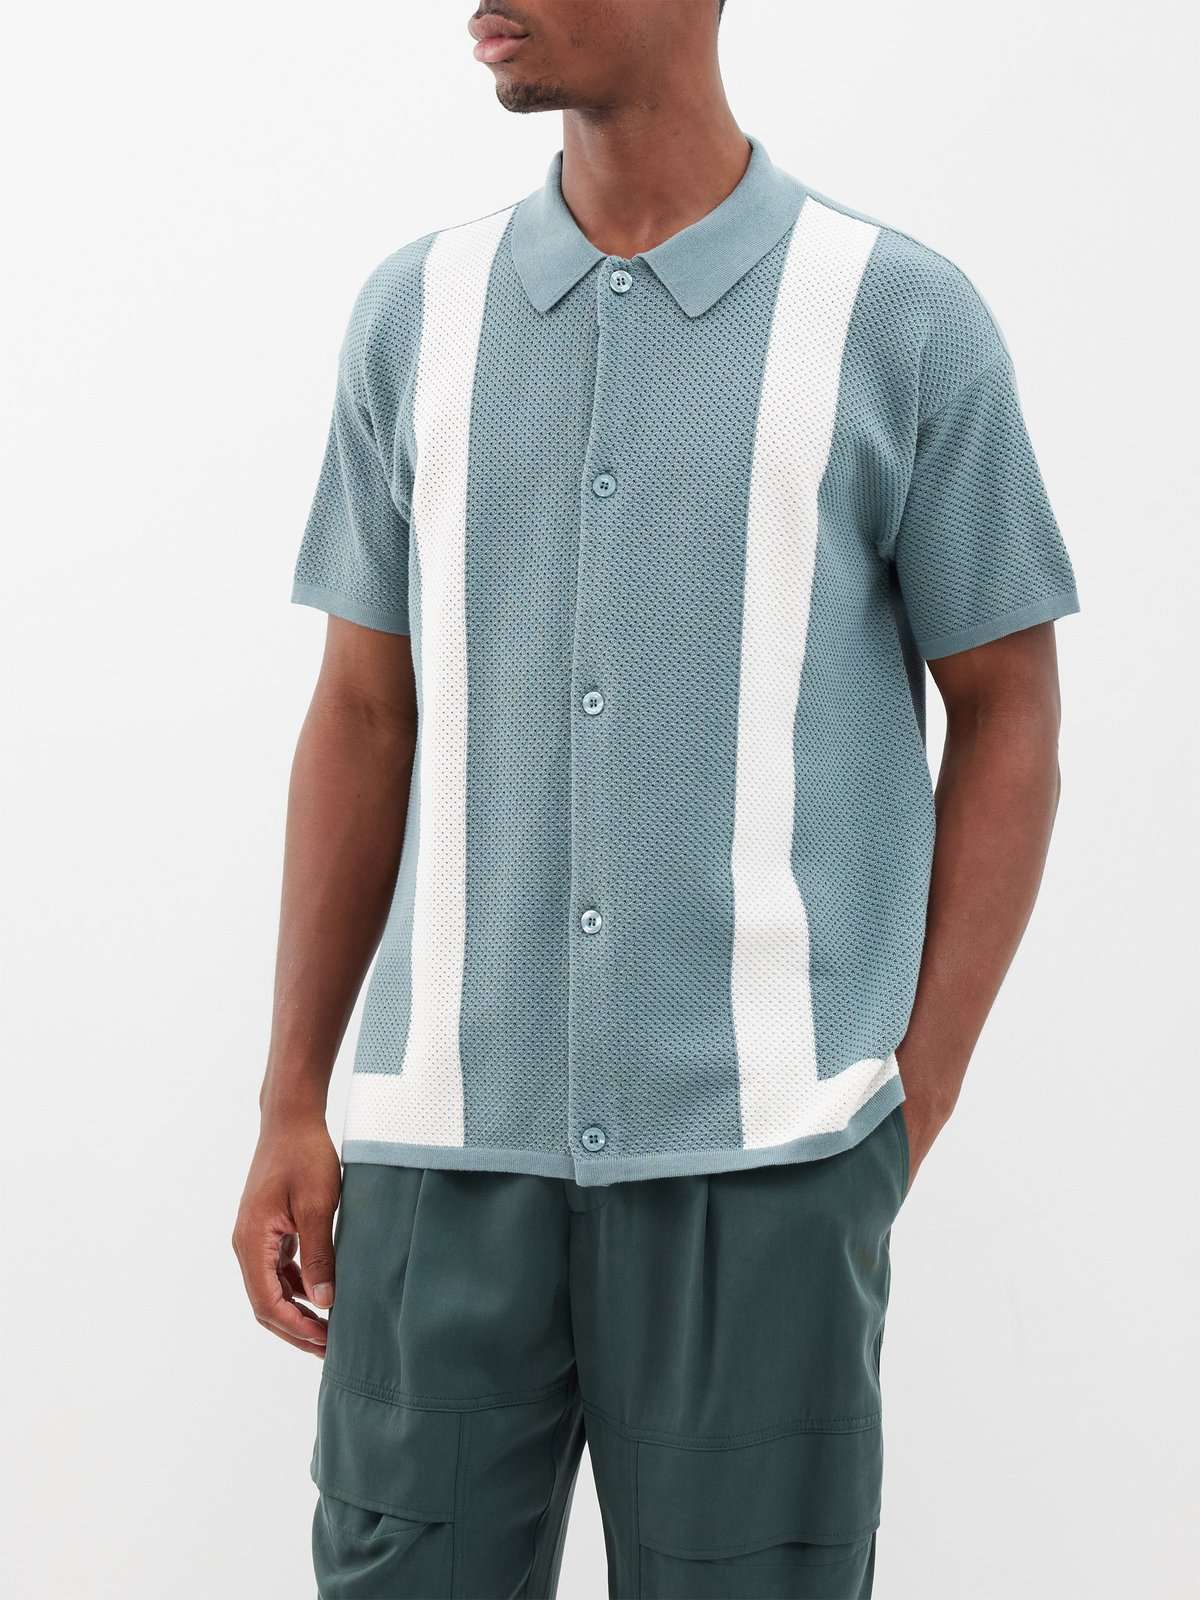 рубашка Barreto с короткими рукавами вязки пуантелле